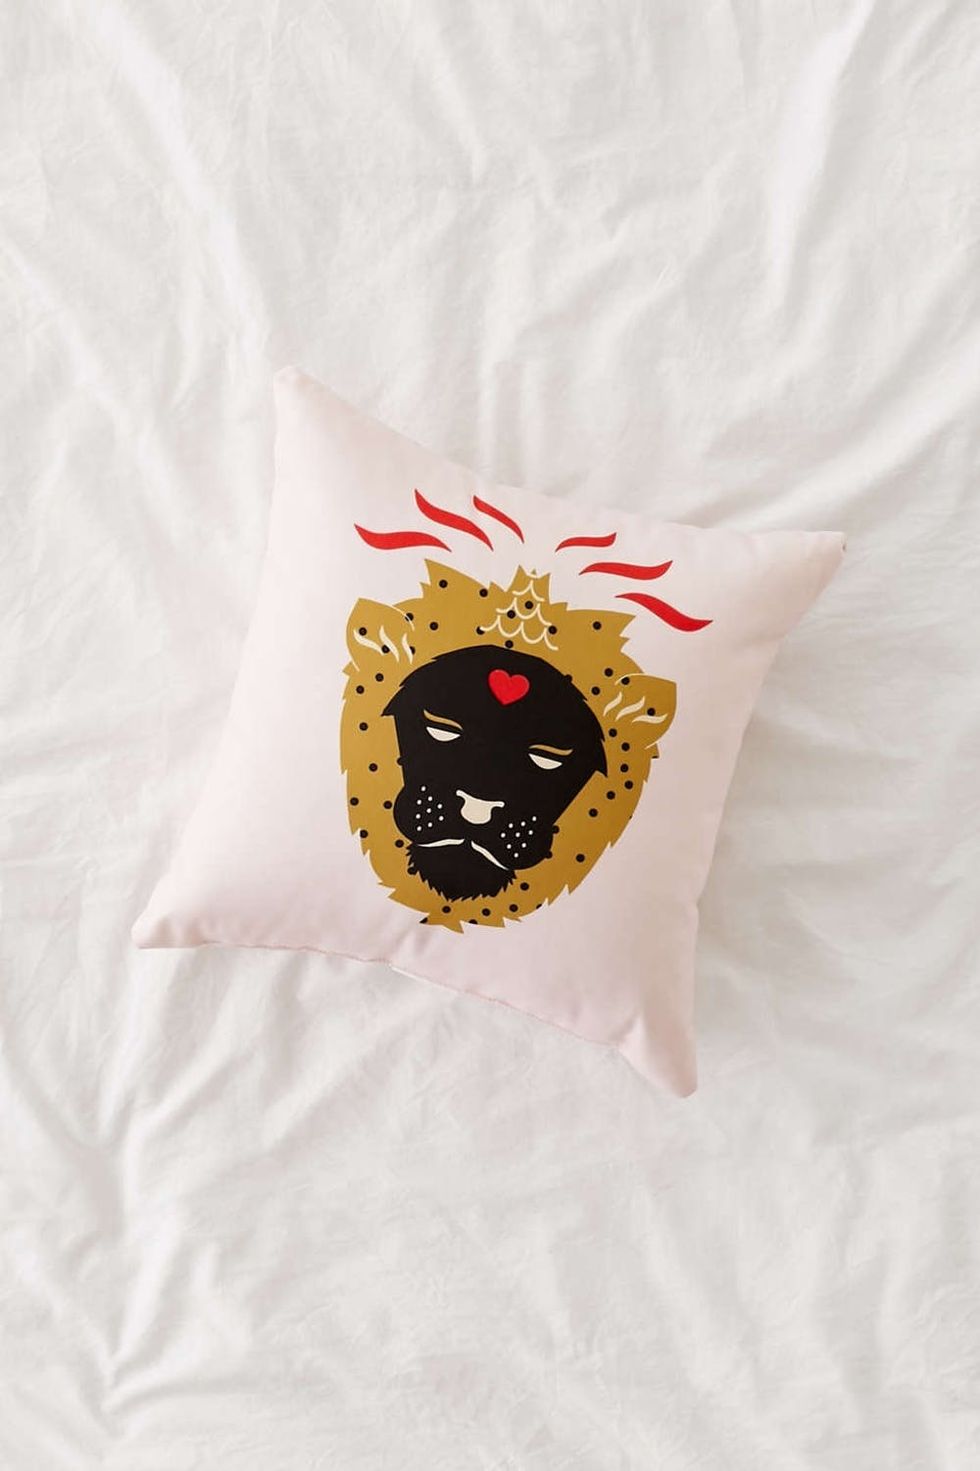 astrological sign throw pillow 